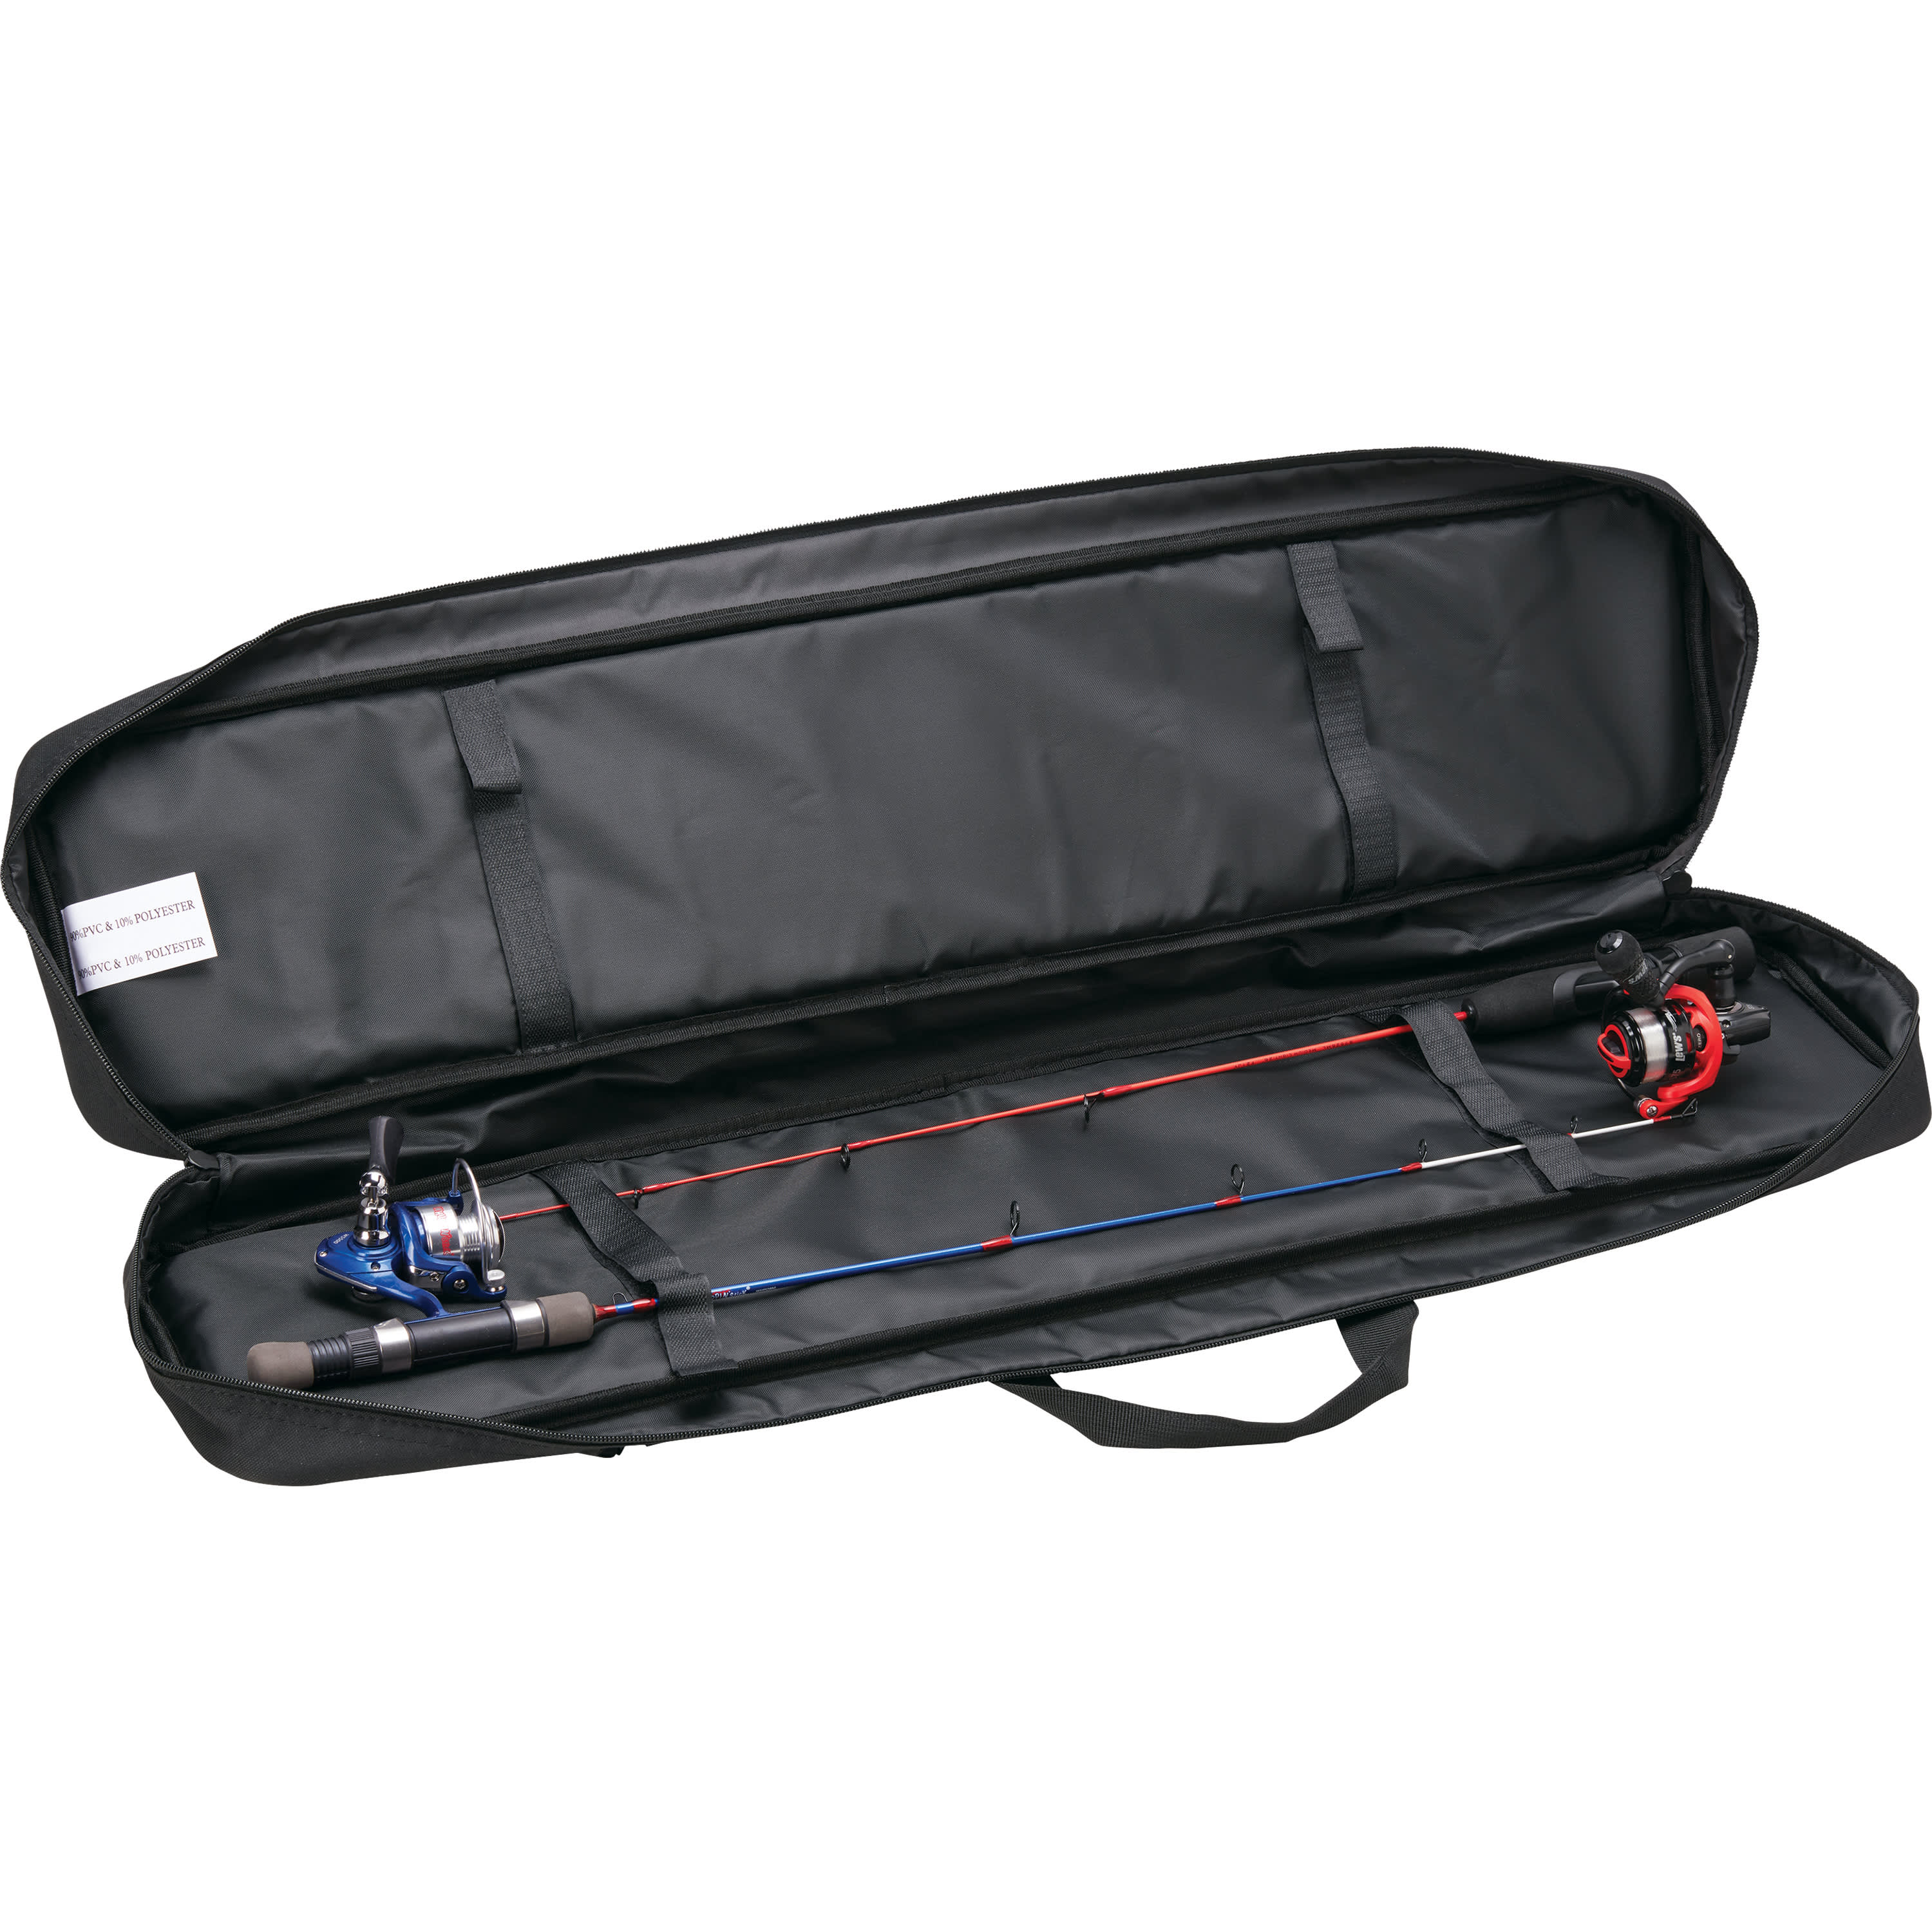 Bass Pro Shops® XPS® 6-Rod Ice Case